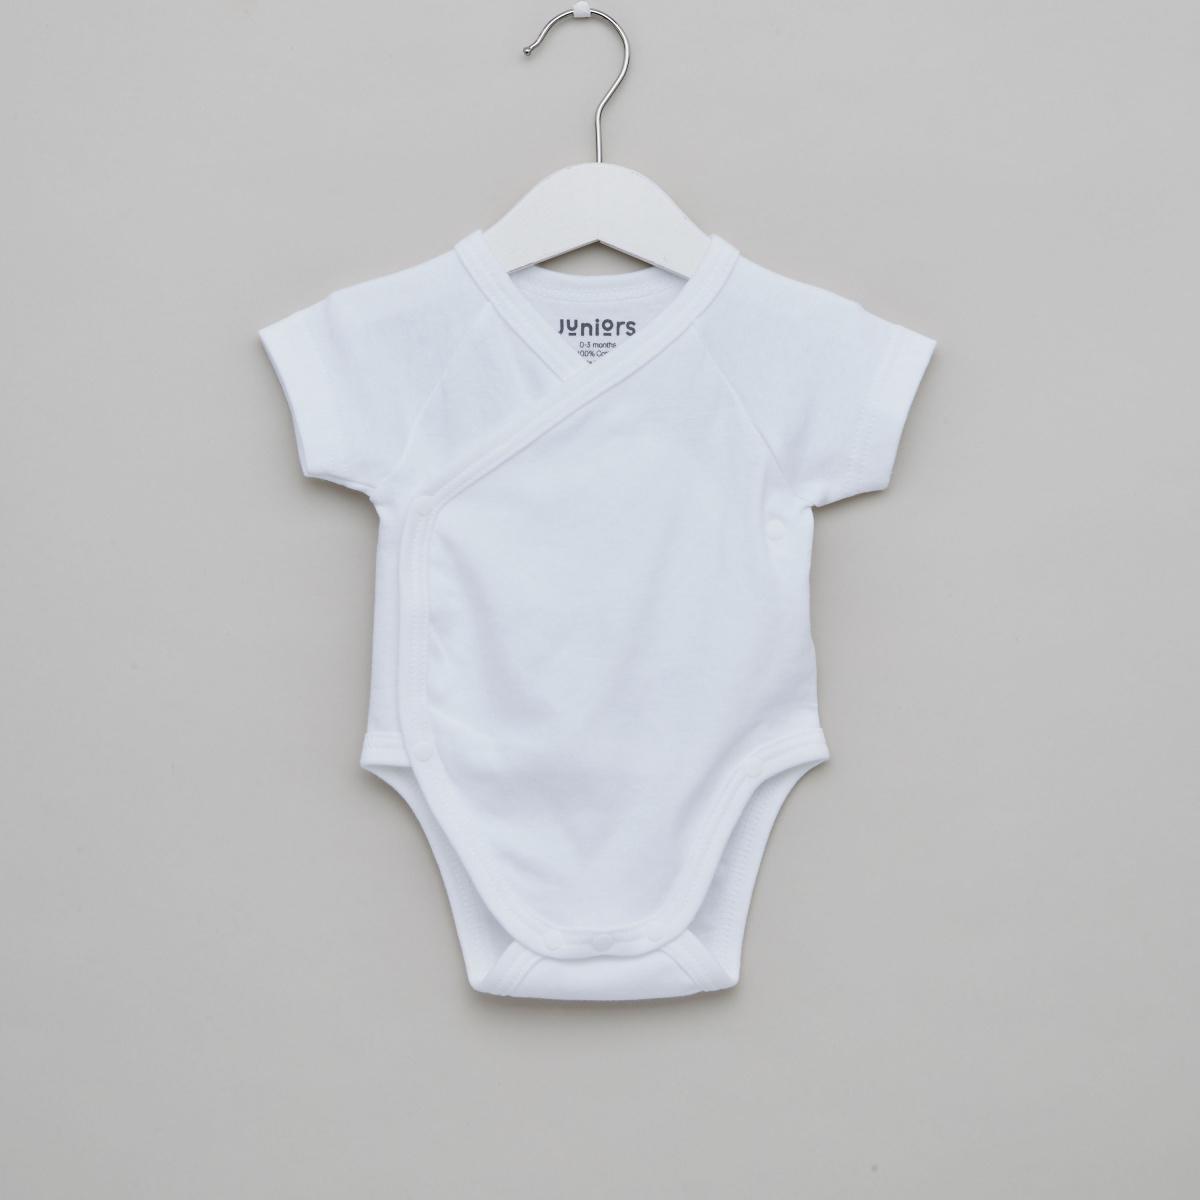 Babyshop S/S Cross Bodysuit-White 